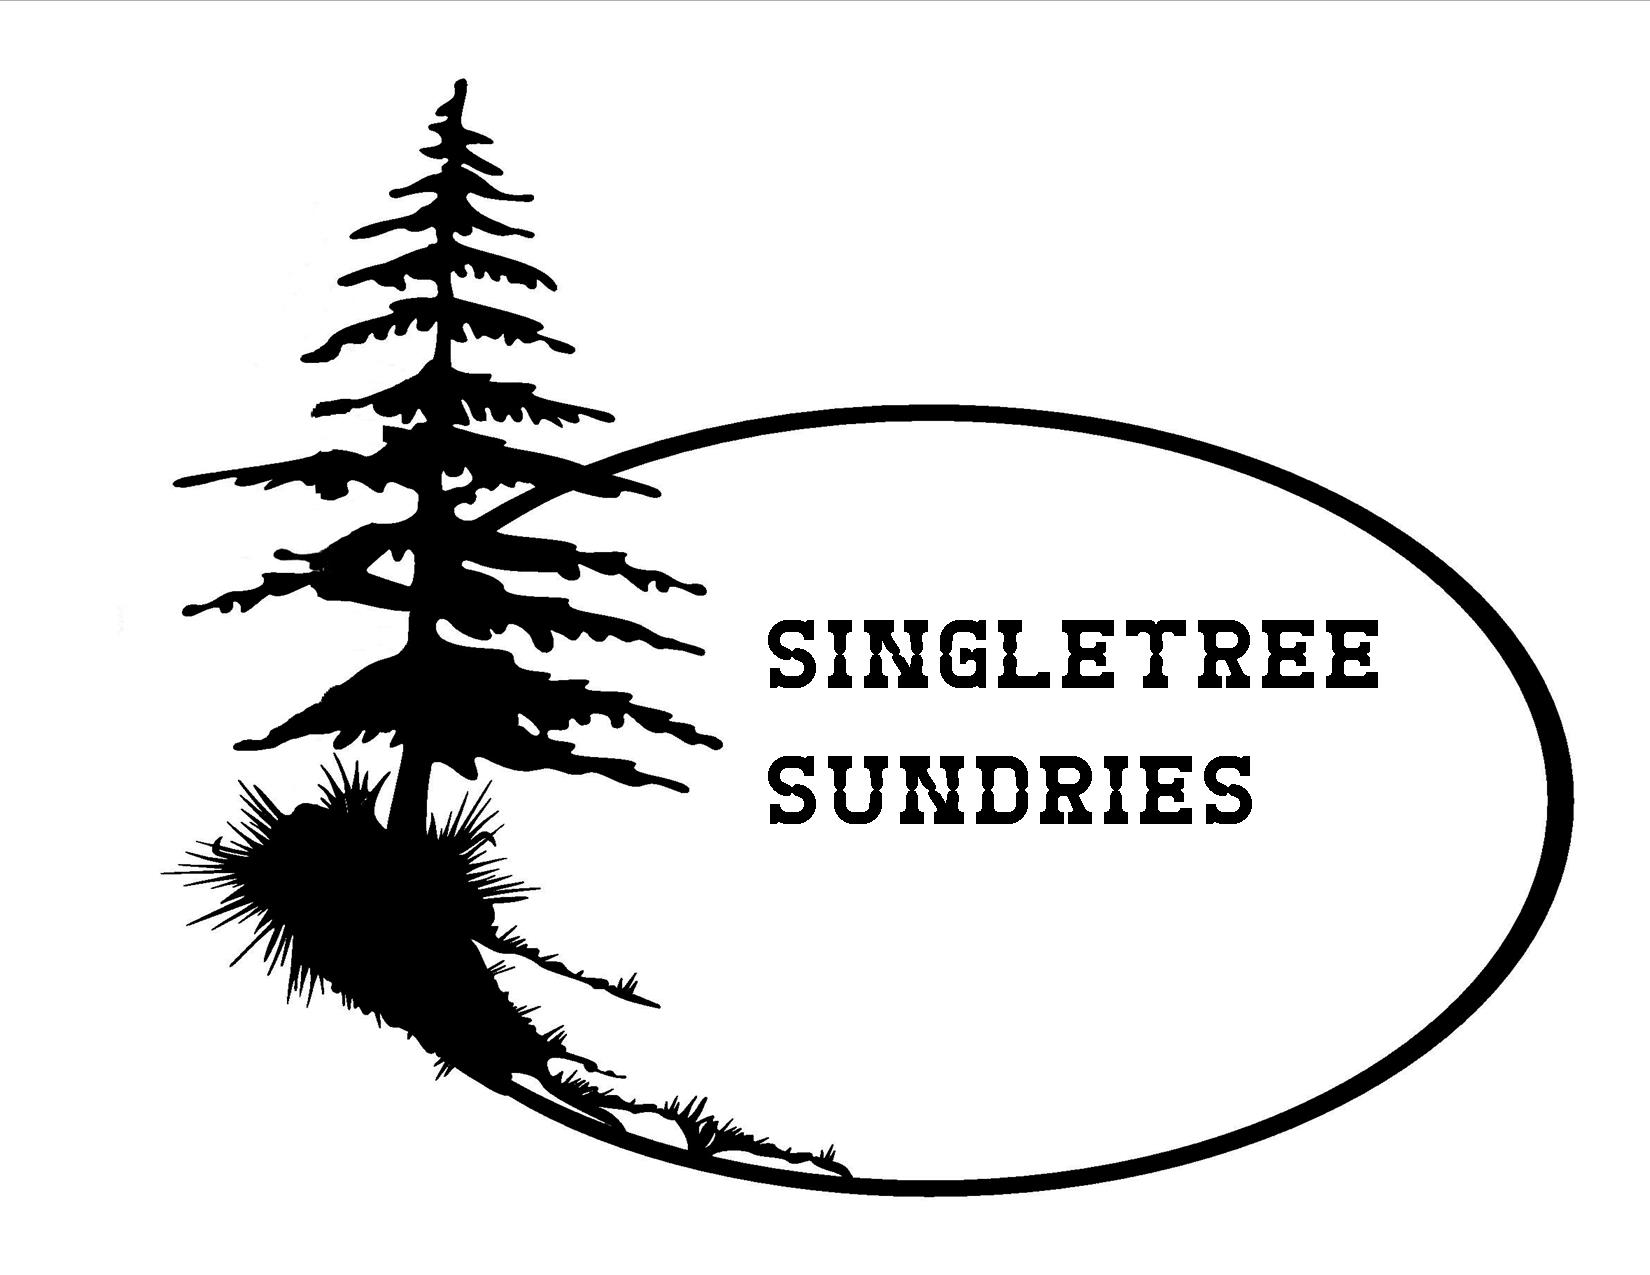 SingleTree Sundries